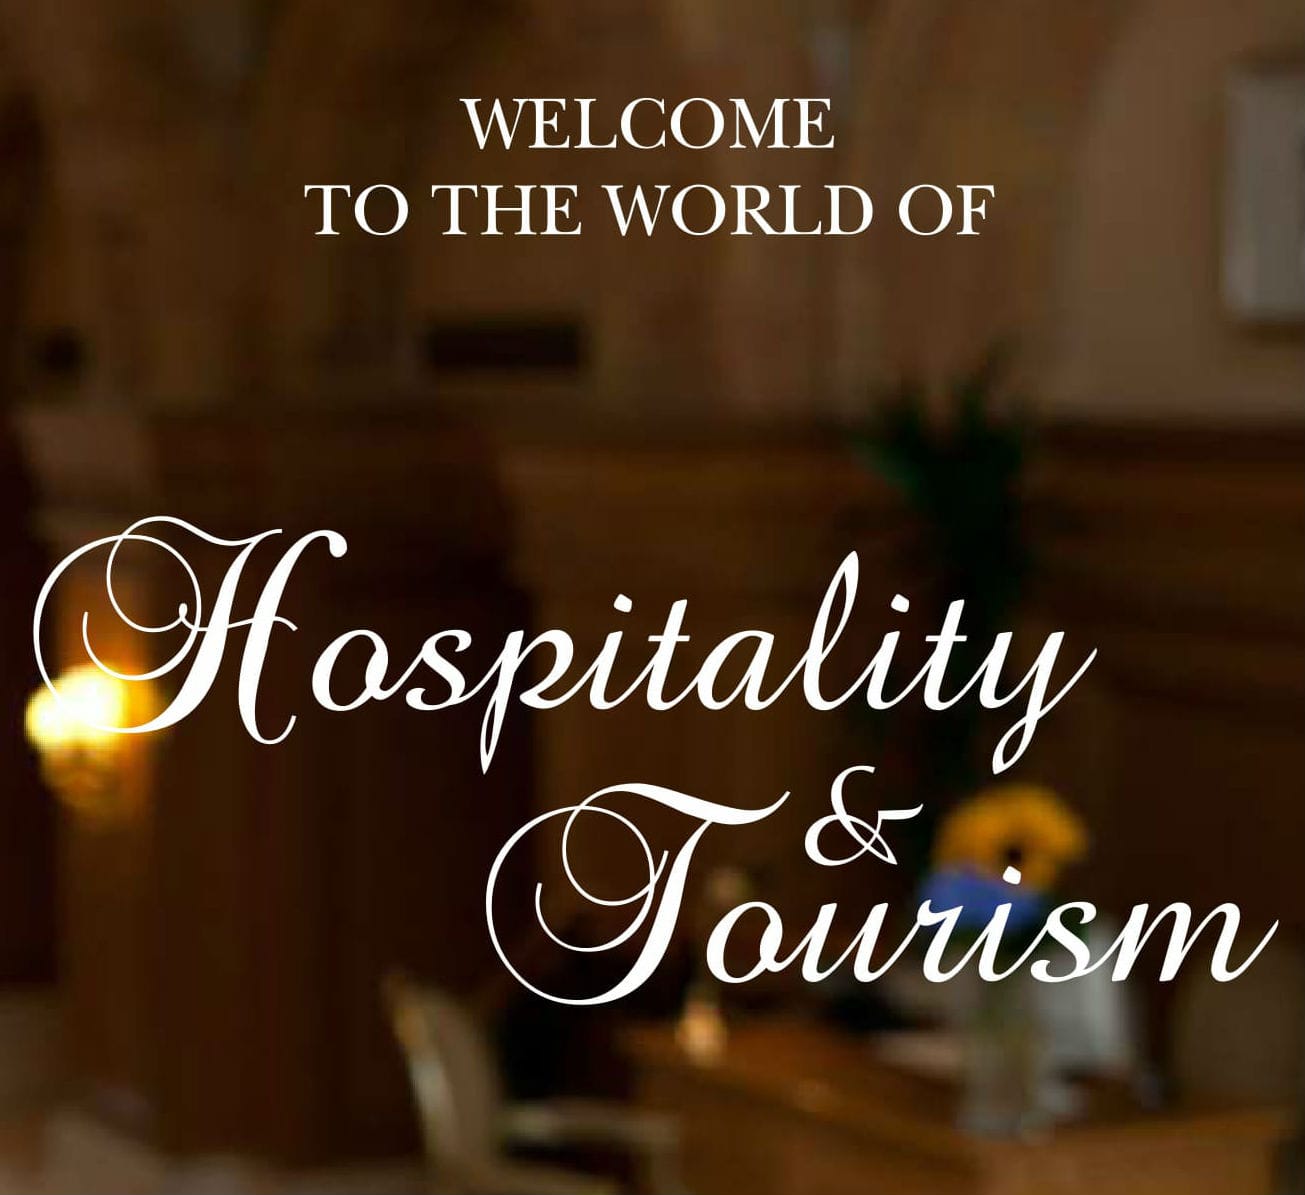 tourism or hospitality establishment